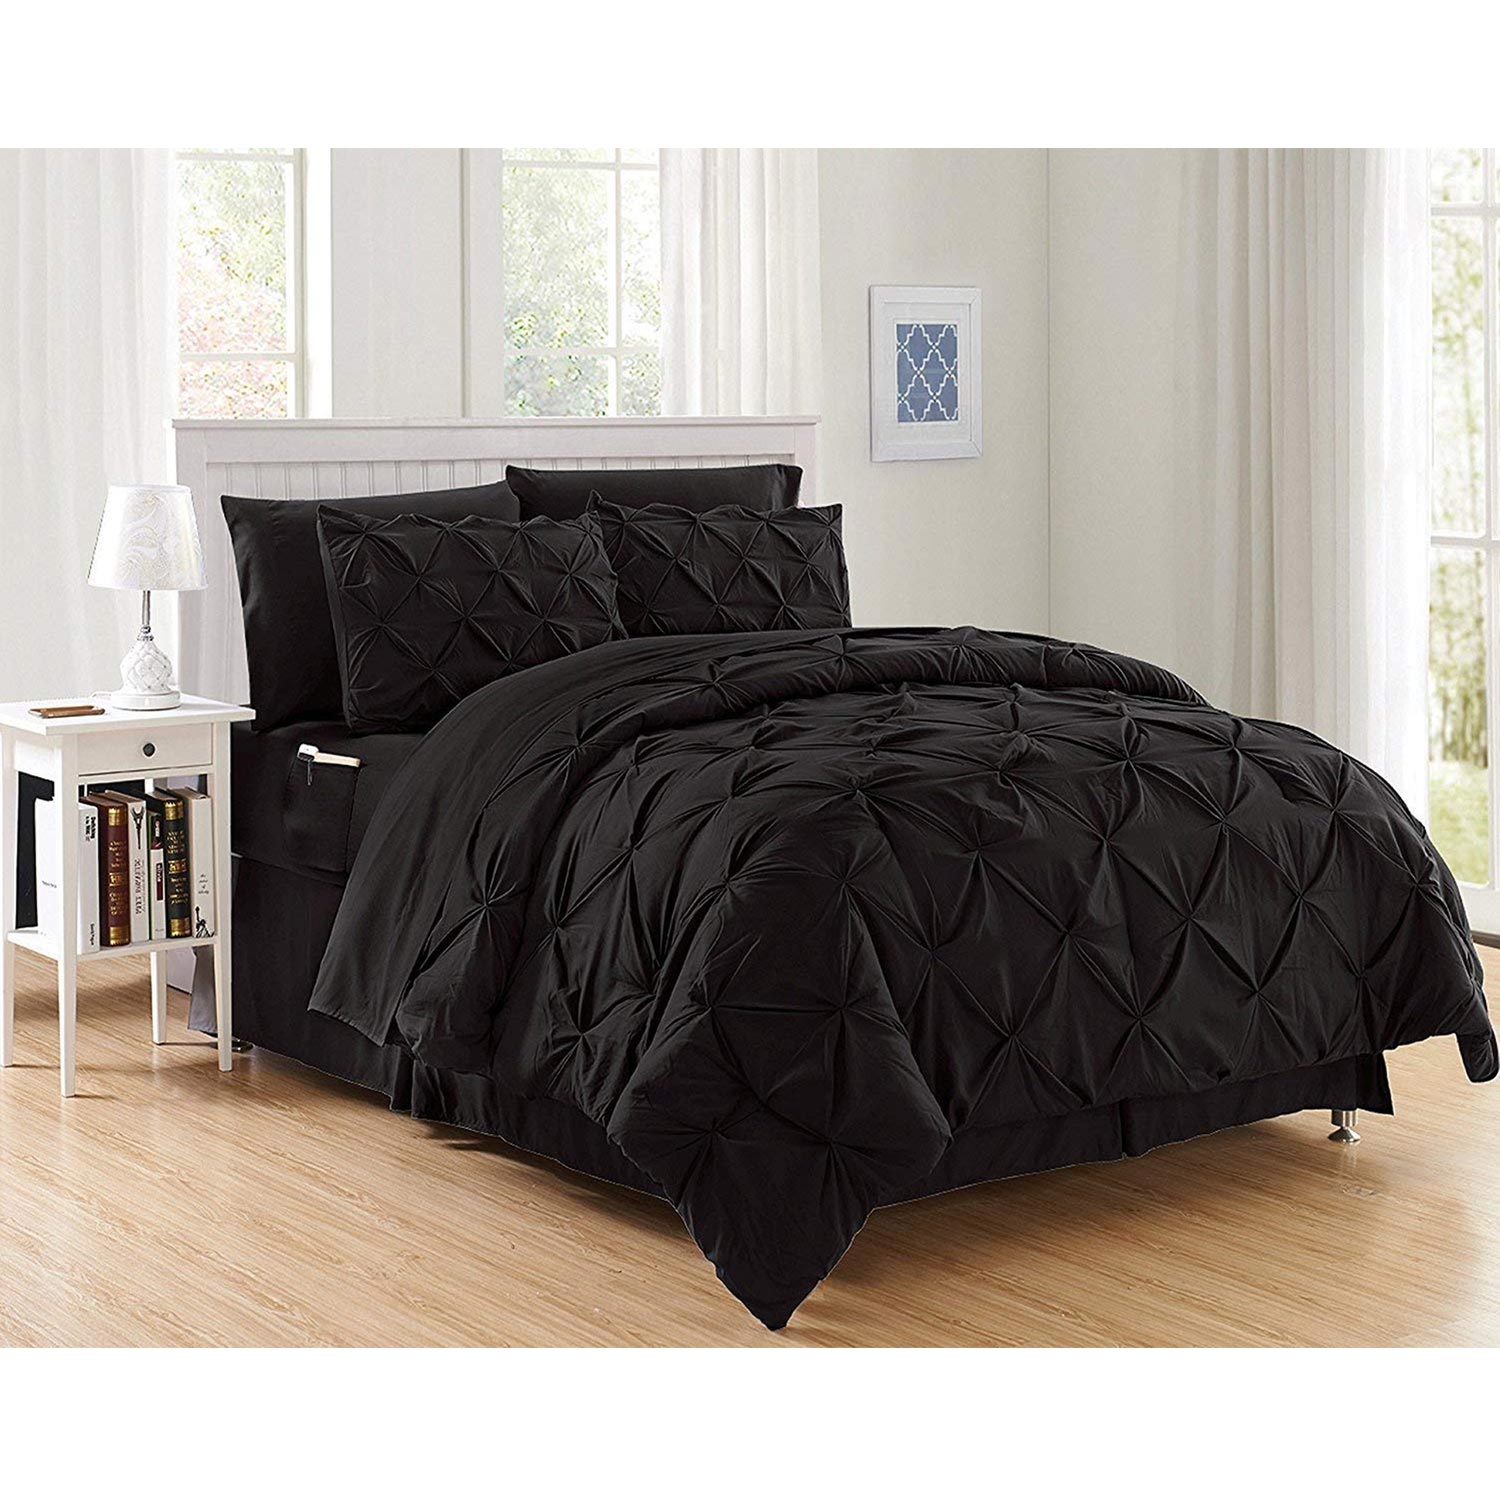 Luxury Best, Softest, Coziest 8-Piece Bed-in-a-Bag Comforter Set